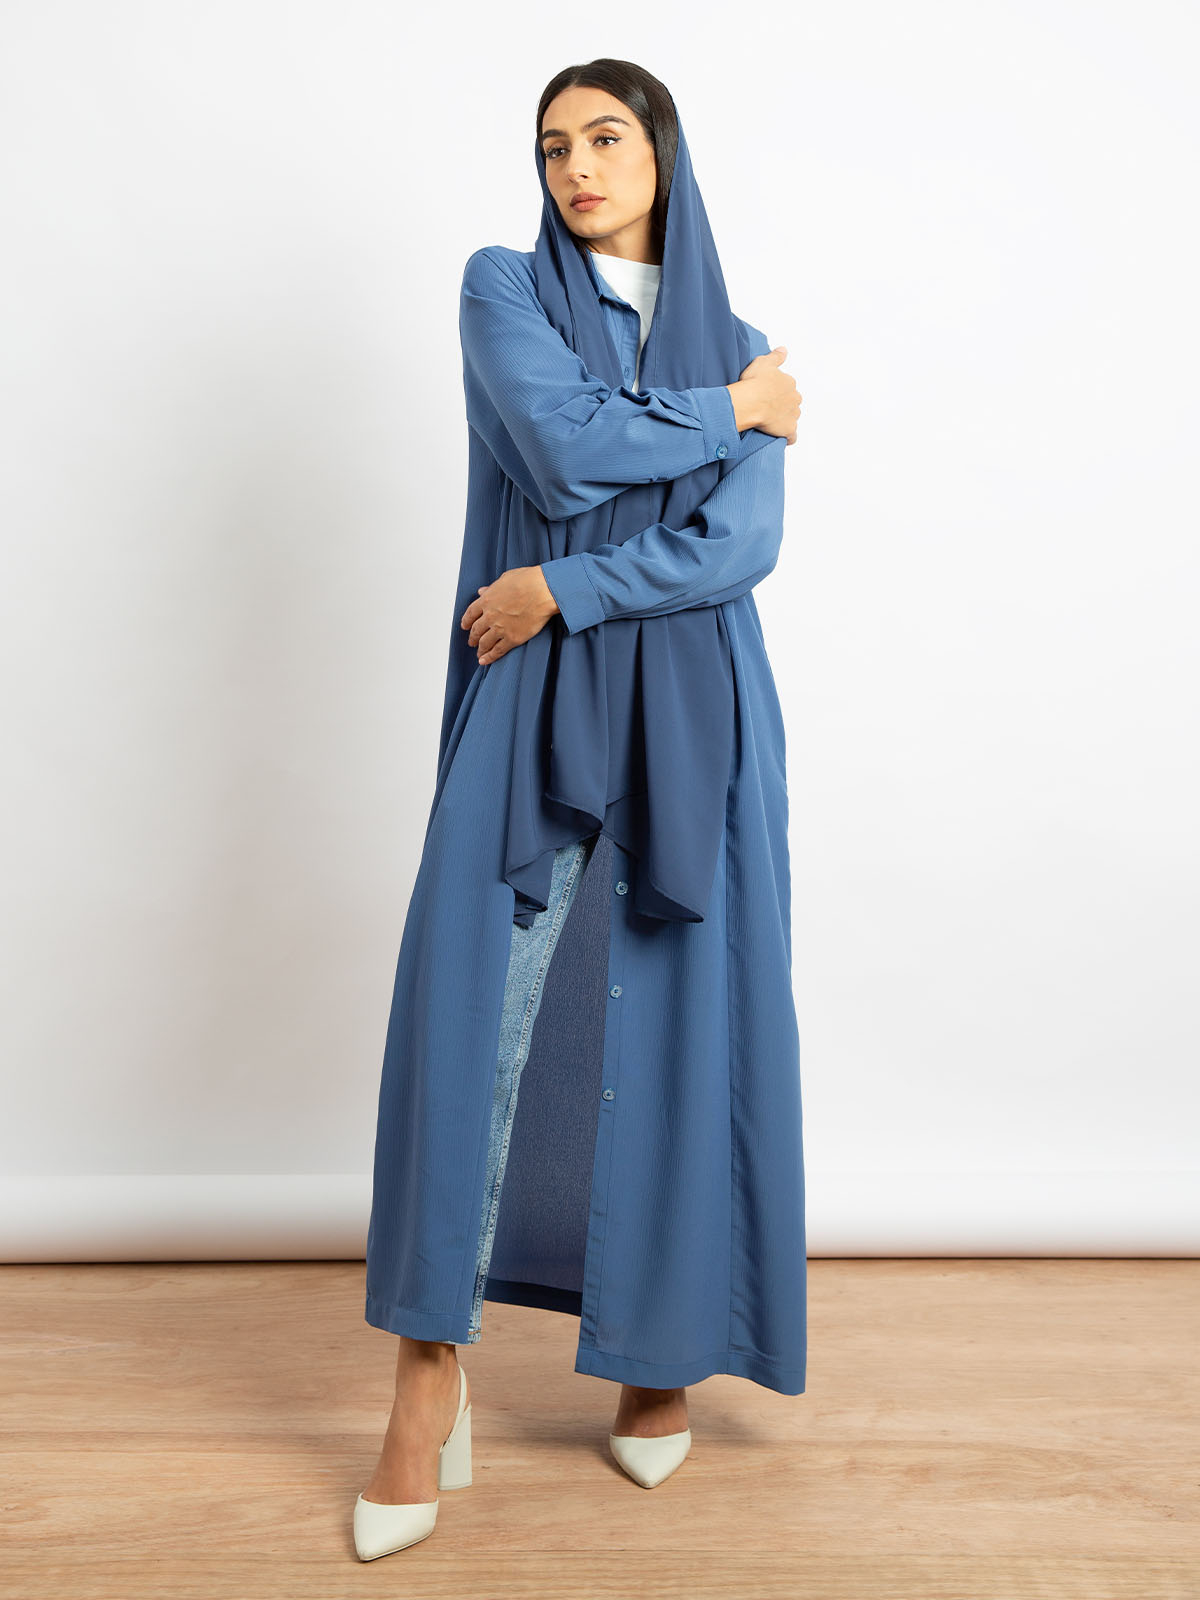 Kaafmeem women clothing regular fit blue color long shirt abaya in fancy yoryu fabric with hidden pockets